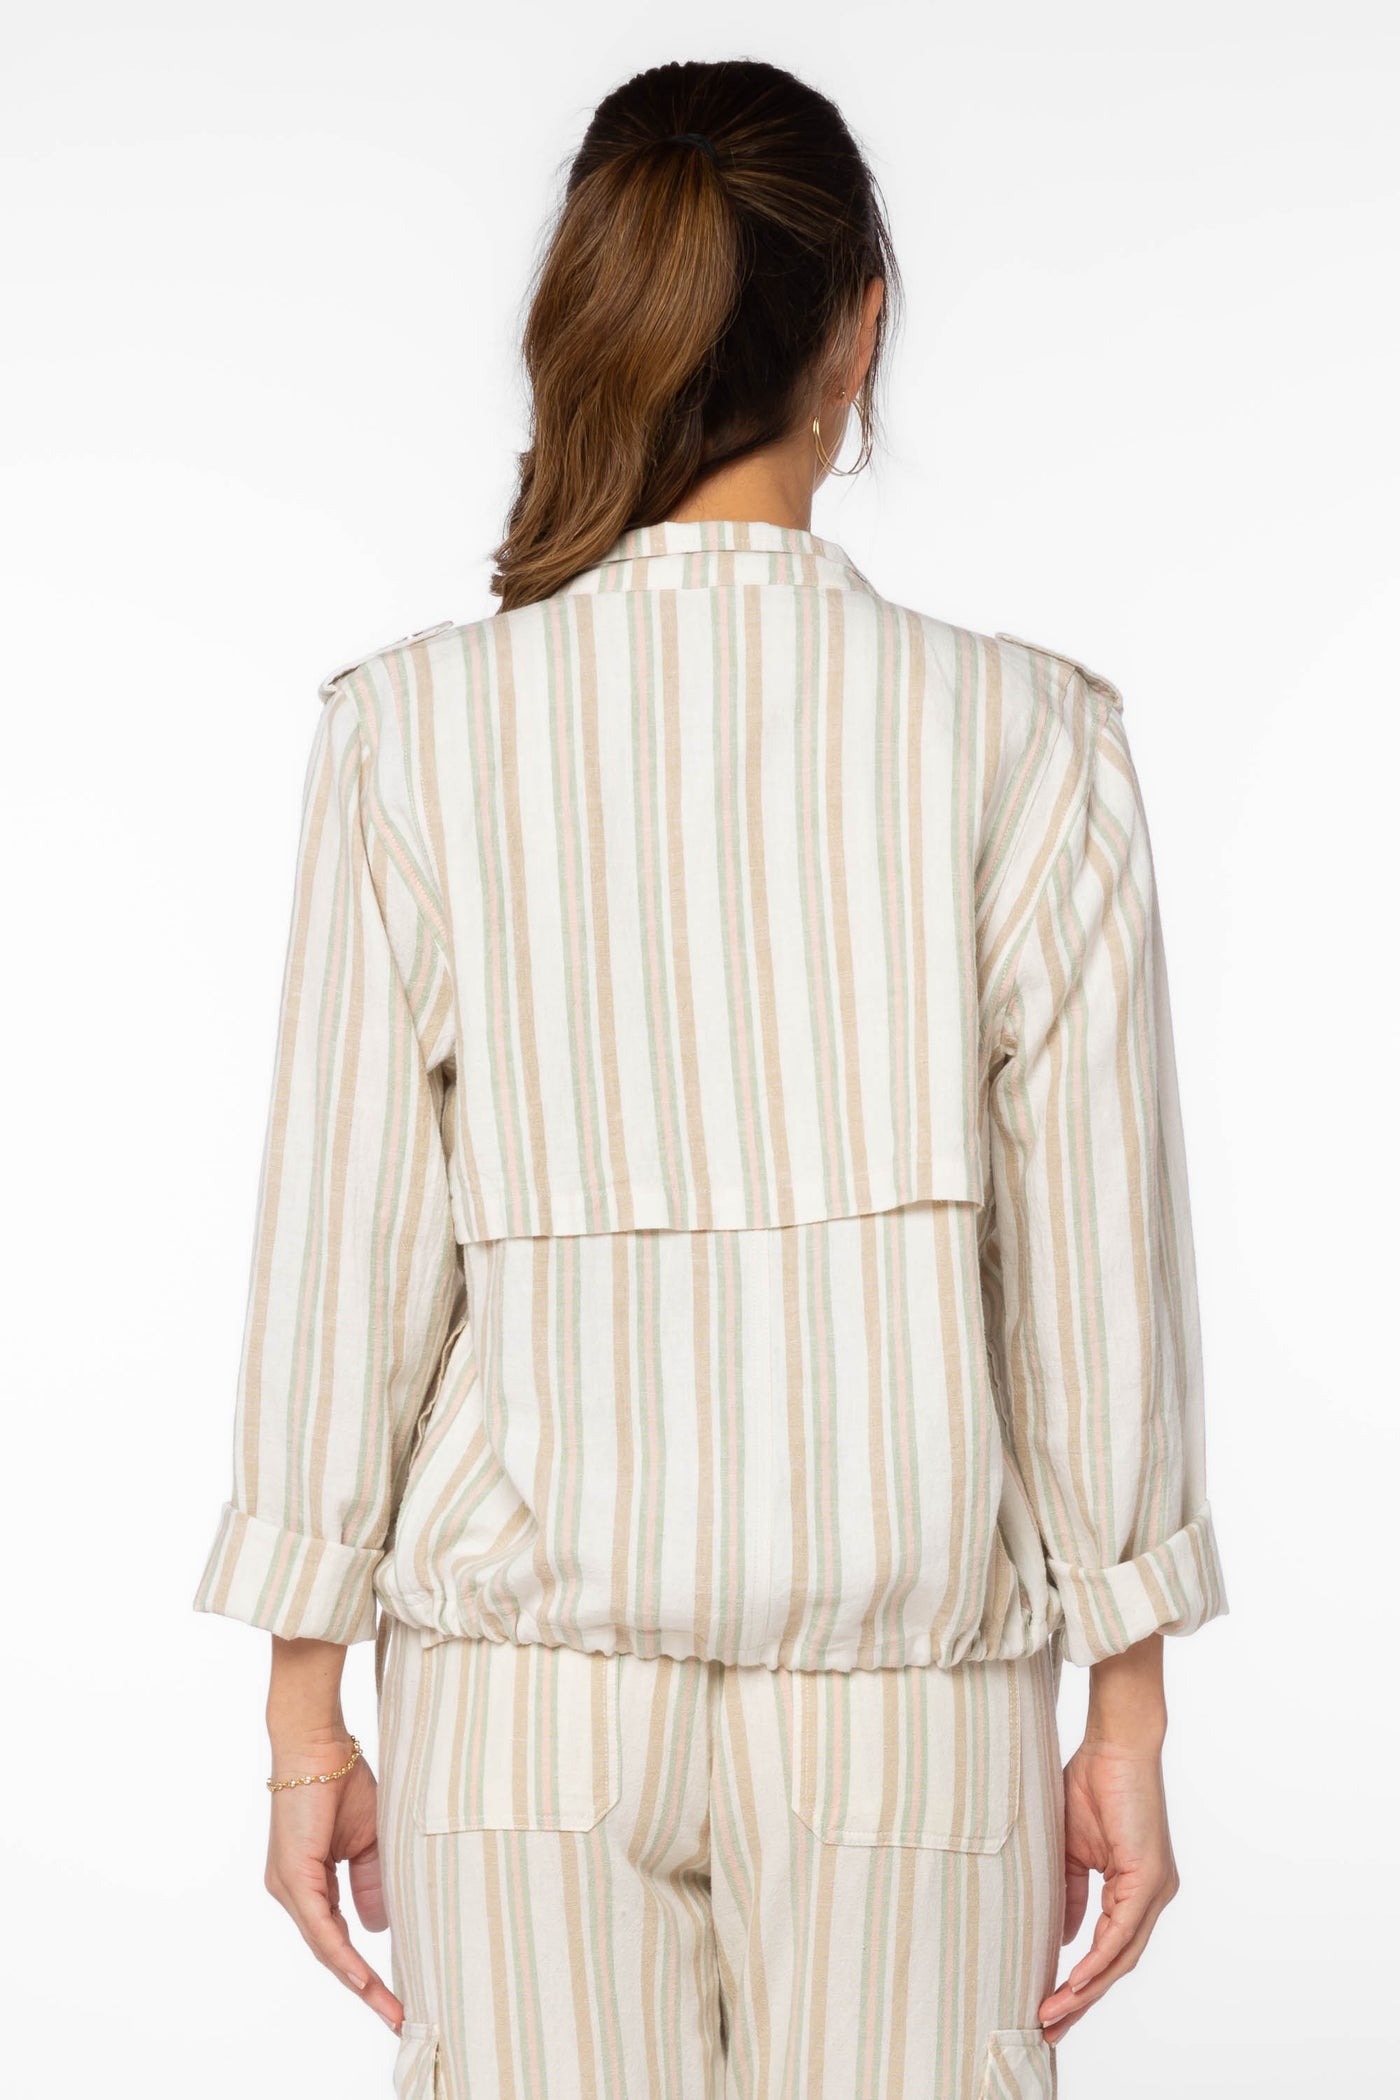 Risley Sage Stripe Jacket - Jackets & Outerwear - Velvet Heart Clothing